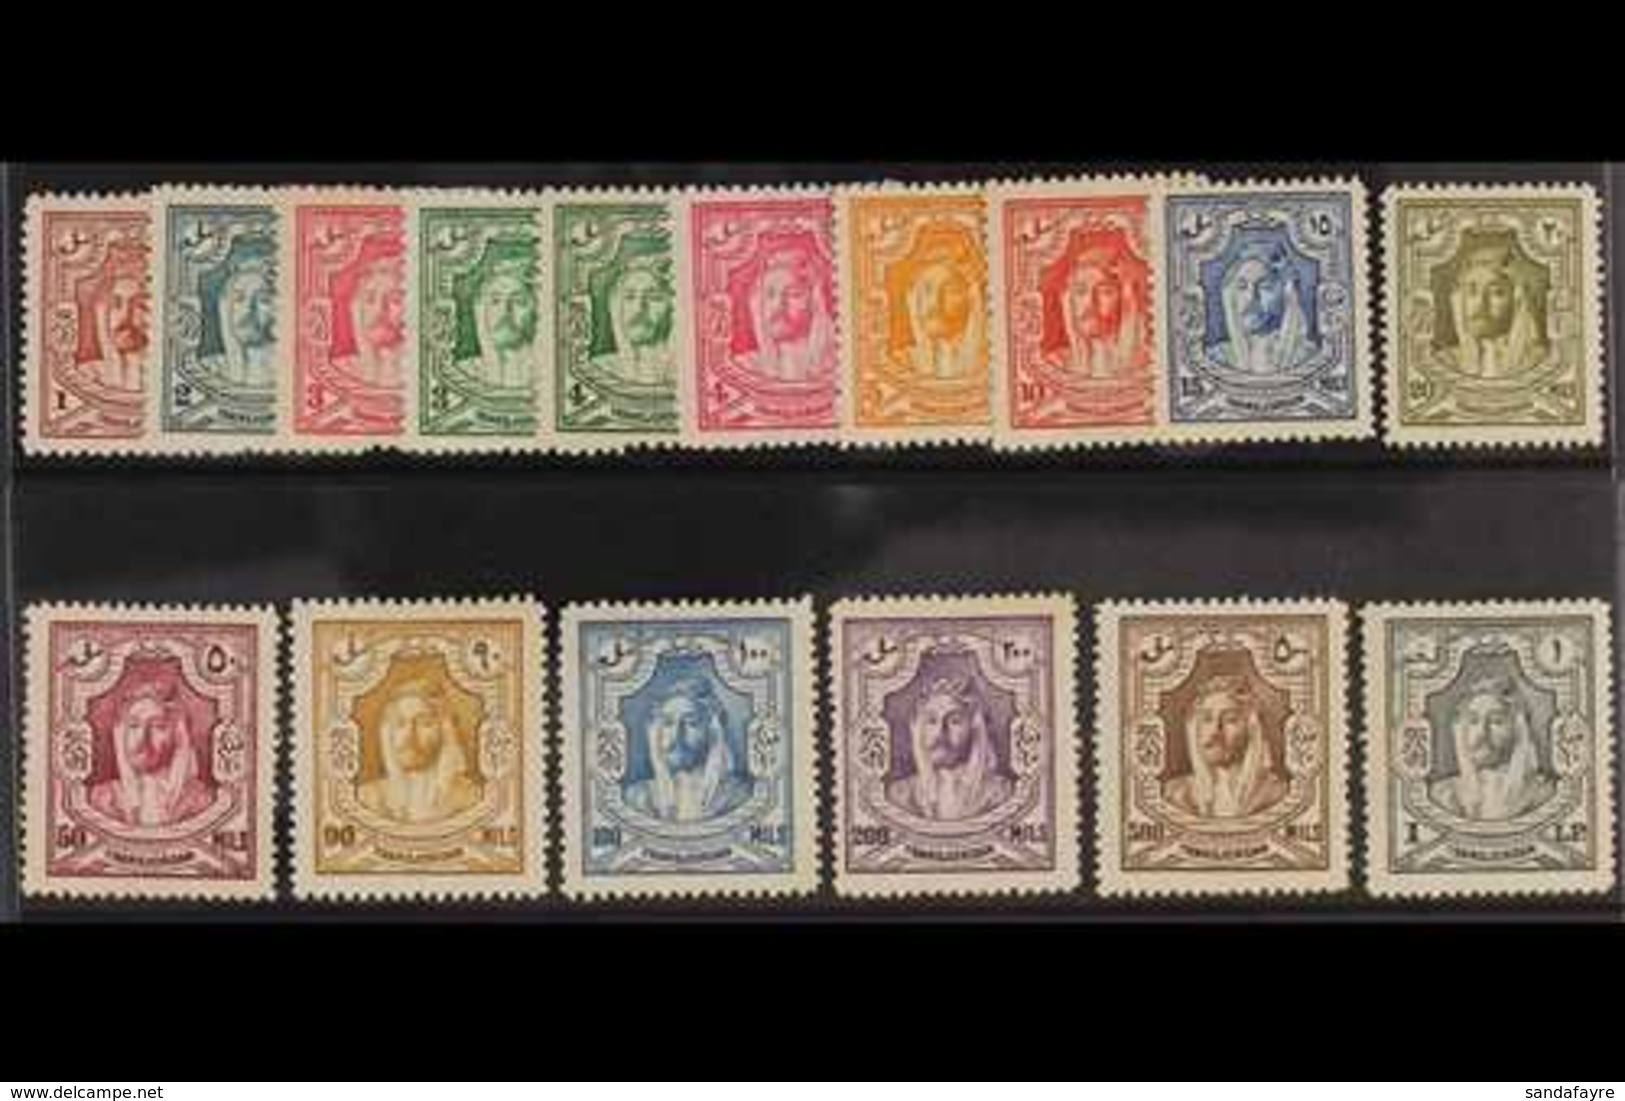 1930-34 (perf 14) Definitives Complete Set, SG 194b/207, Very Fine Mint. (16 Stamps) For More Images, Please Visit Http: - Jordanië